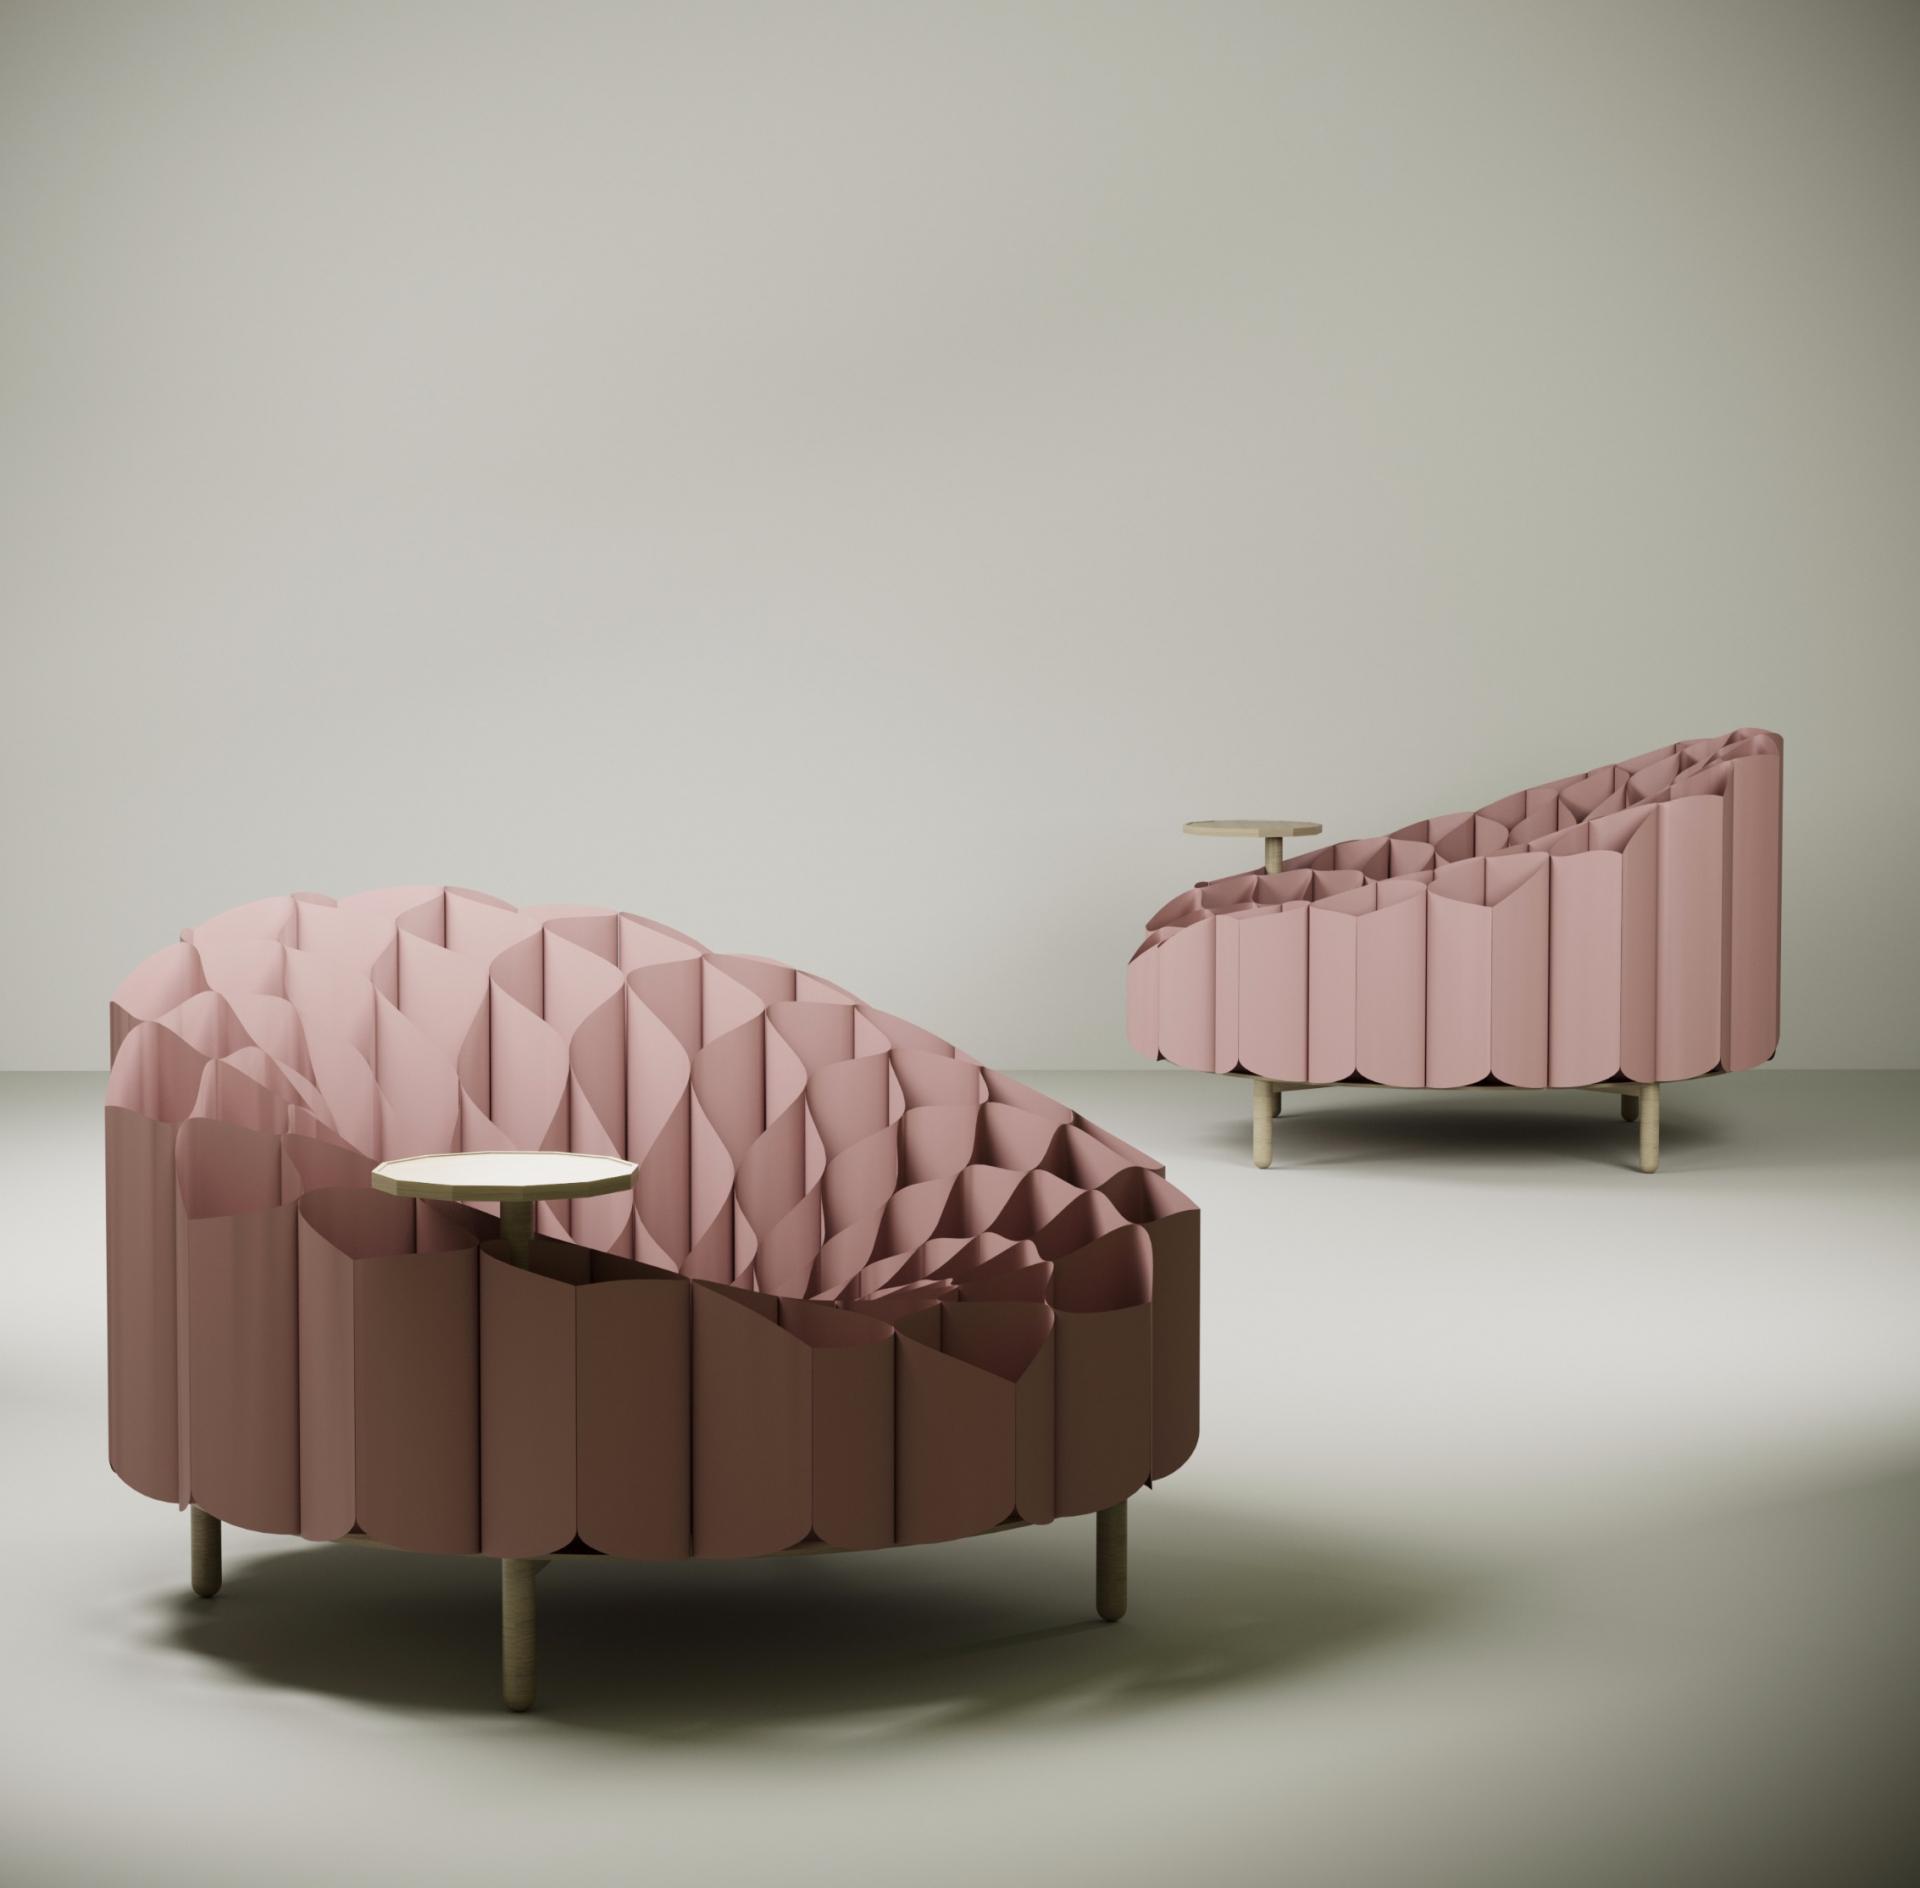 A statement furniture piece designed for Gen Z